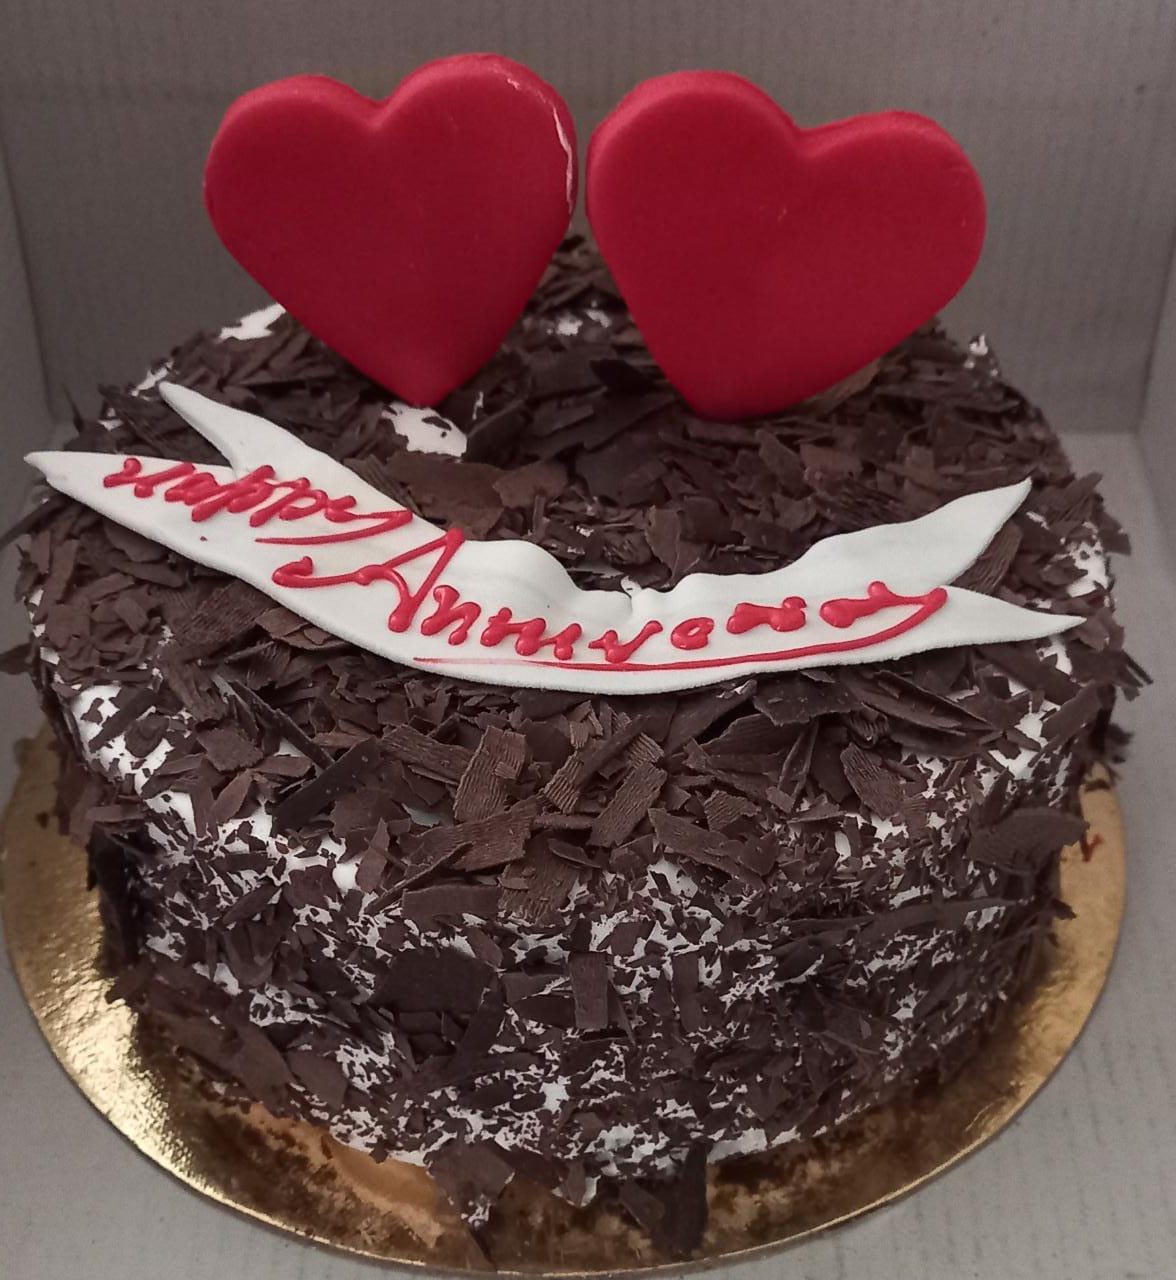 Buy/Send Beautiful Anniversary Cake Online - Baker's Wagon